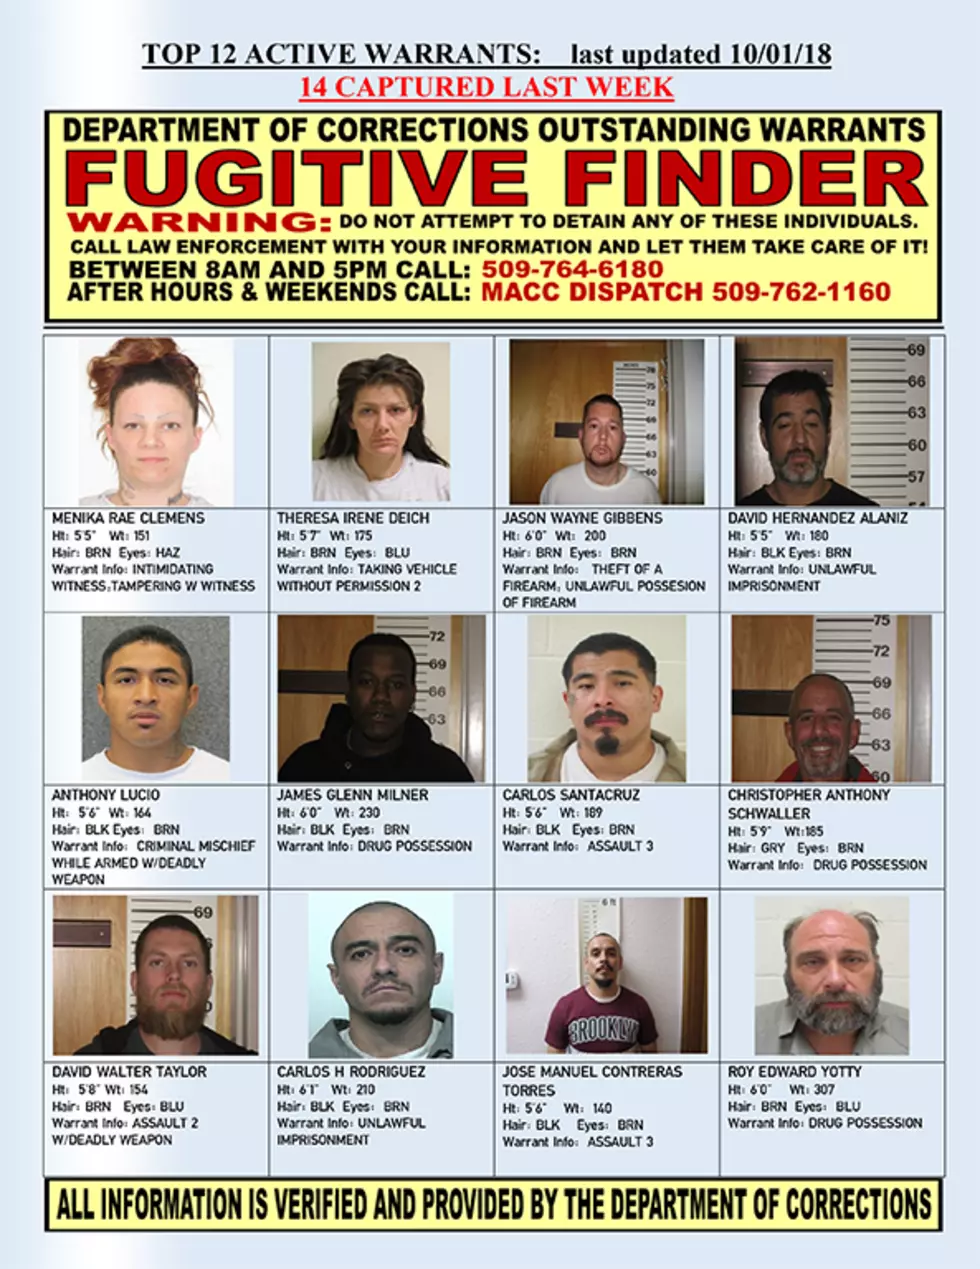 Friday&#8217;s Fugitive Finder Features All Kinds of Folks